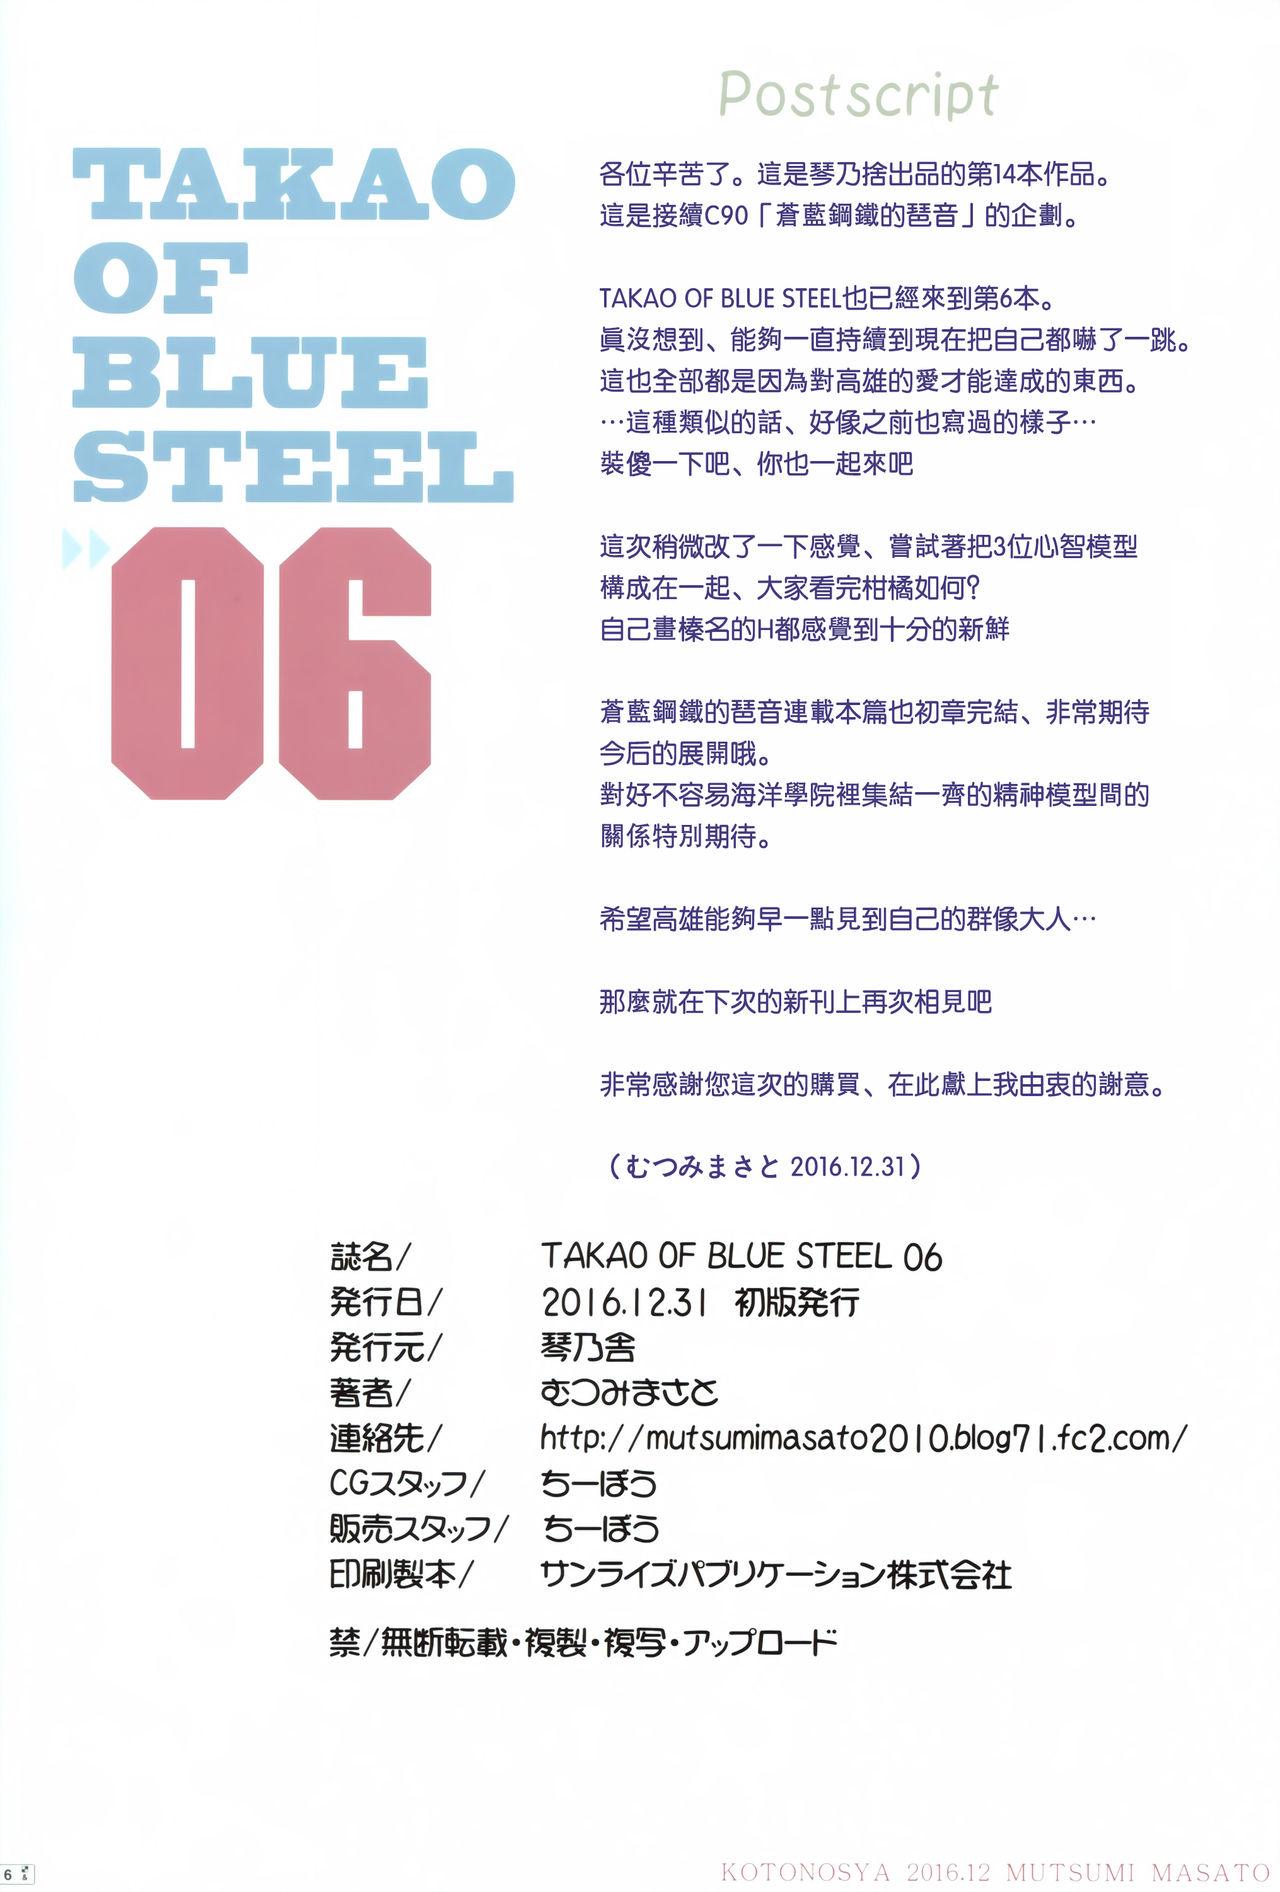 TAKAO OF BLUE STEEL 06 25